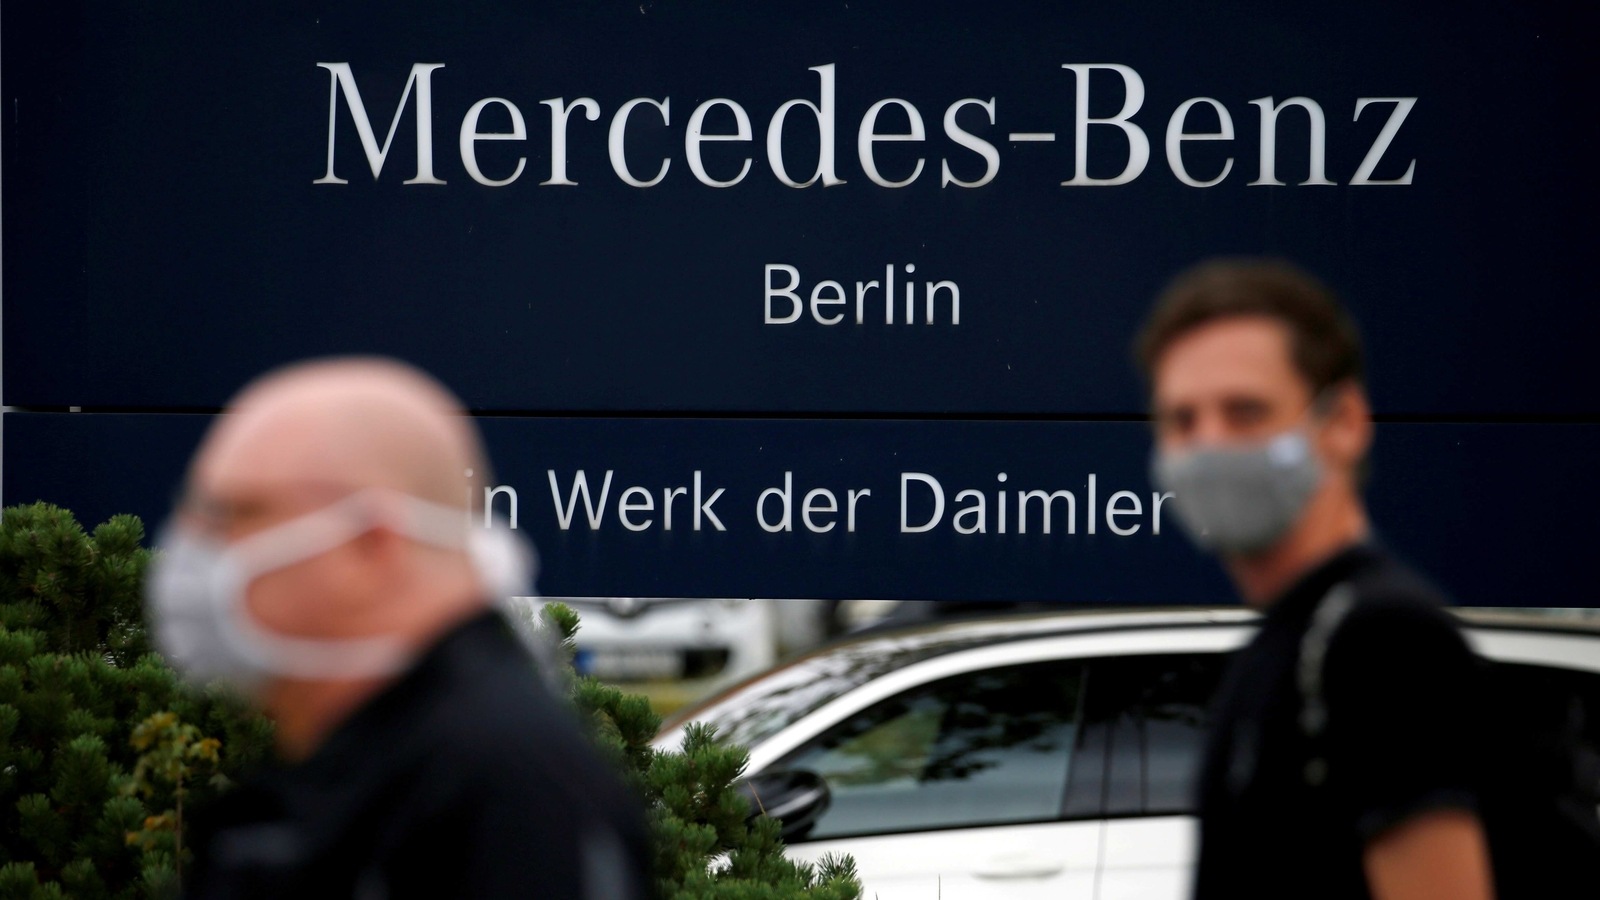 MercedesBenz recalls over 1 million cars over tech error Hindustan Times